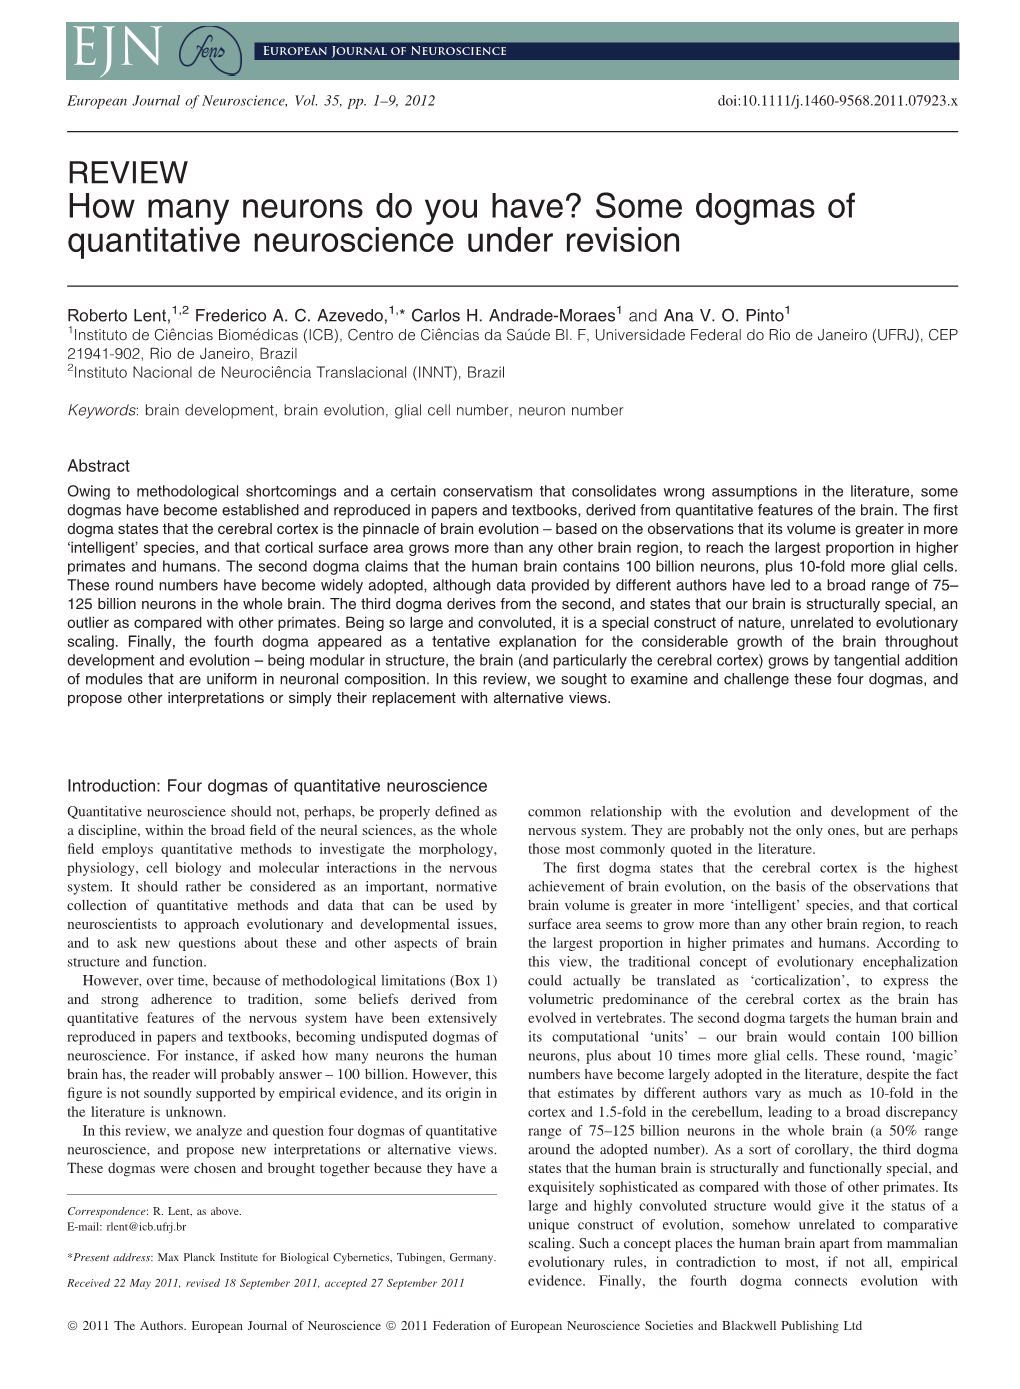 How Many Neurons Do You Have? Some Dogmas of Quantitative Neuroscience Under Revision